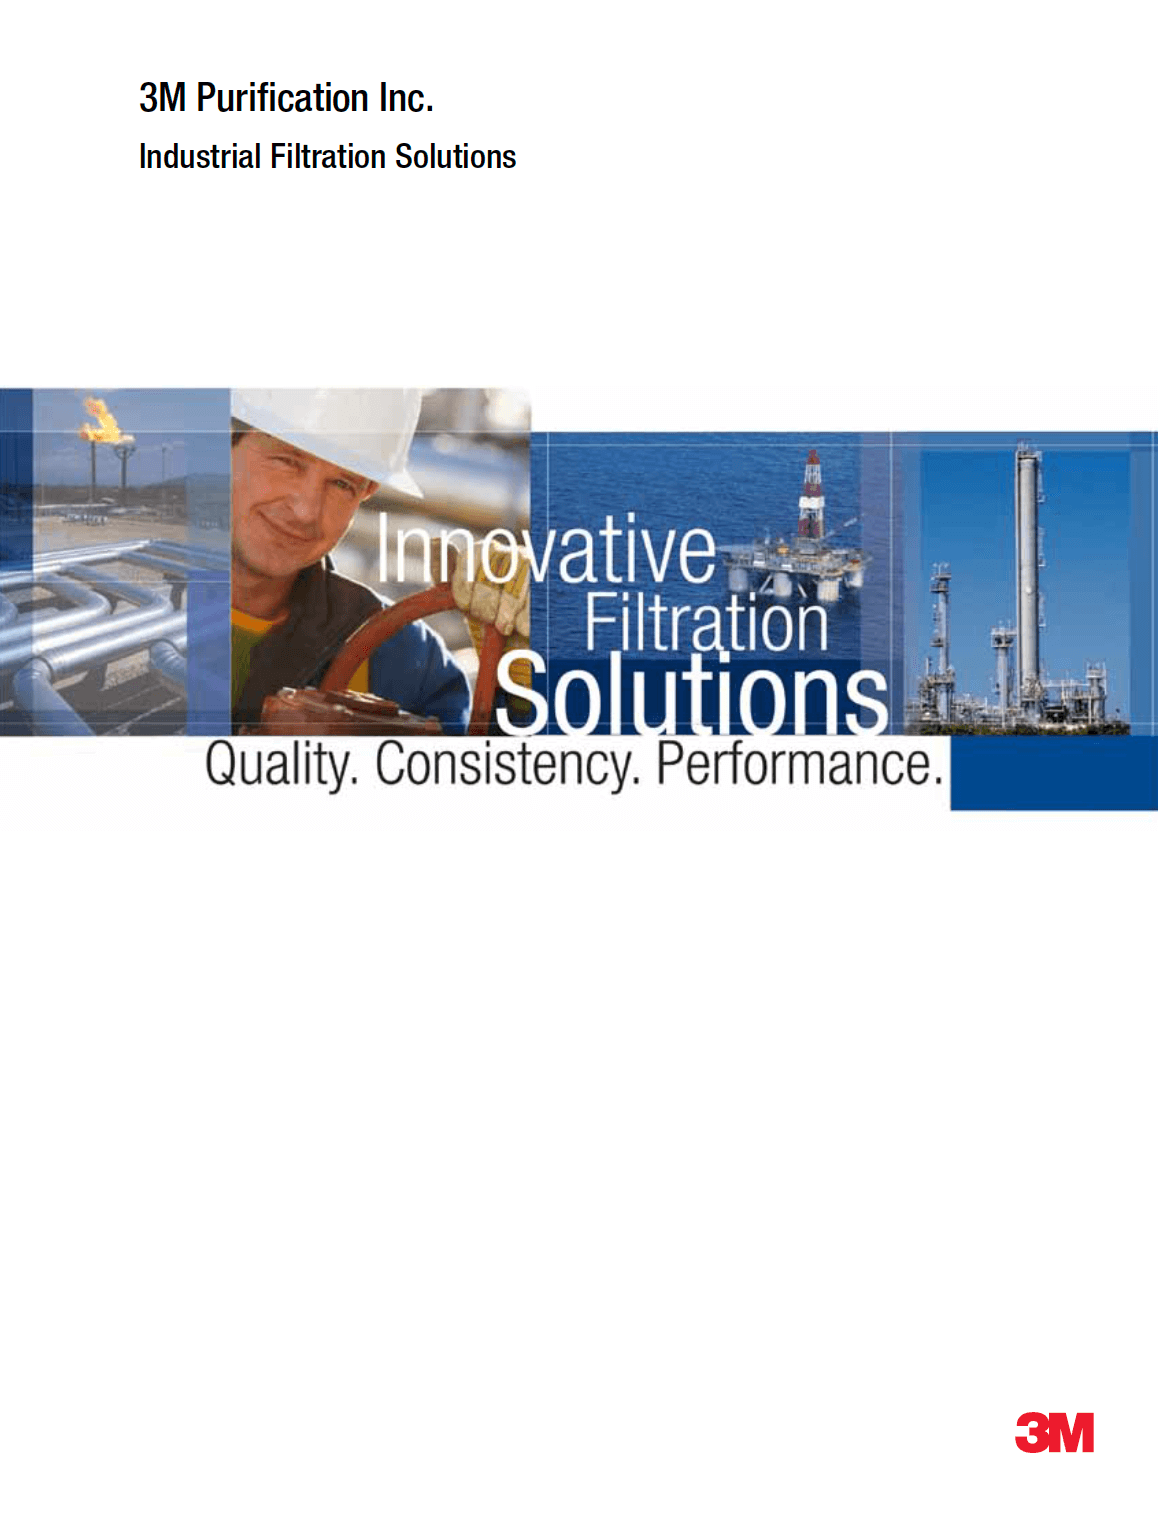 3M Purification Solution Brochure